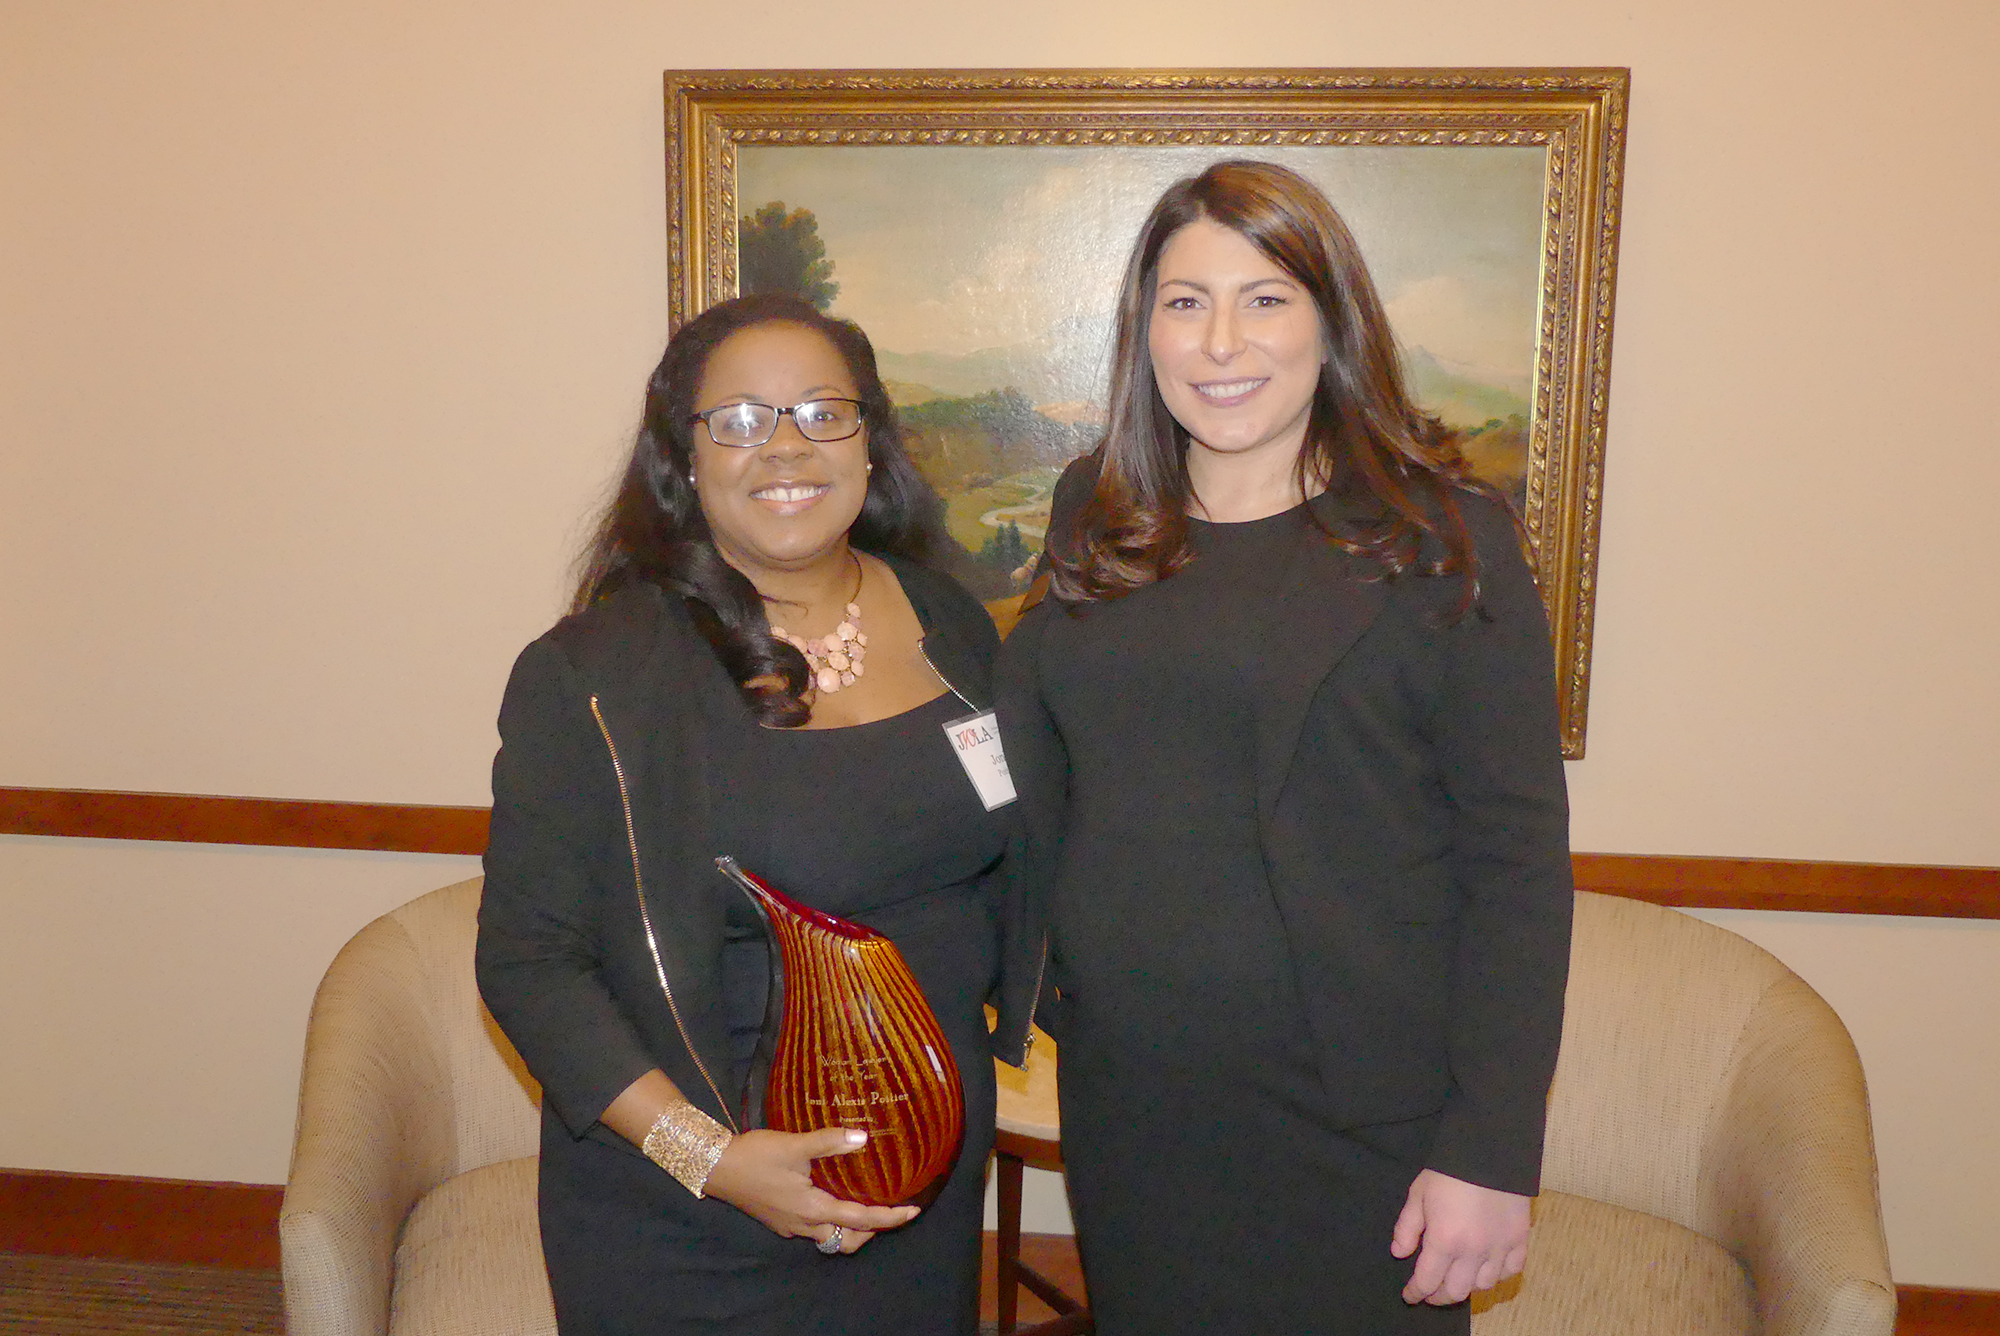 Jacksonville Women Lawyers Association Lawyer of the Year Joni Poitier, left, and JWLA President Jamie Karpman.